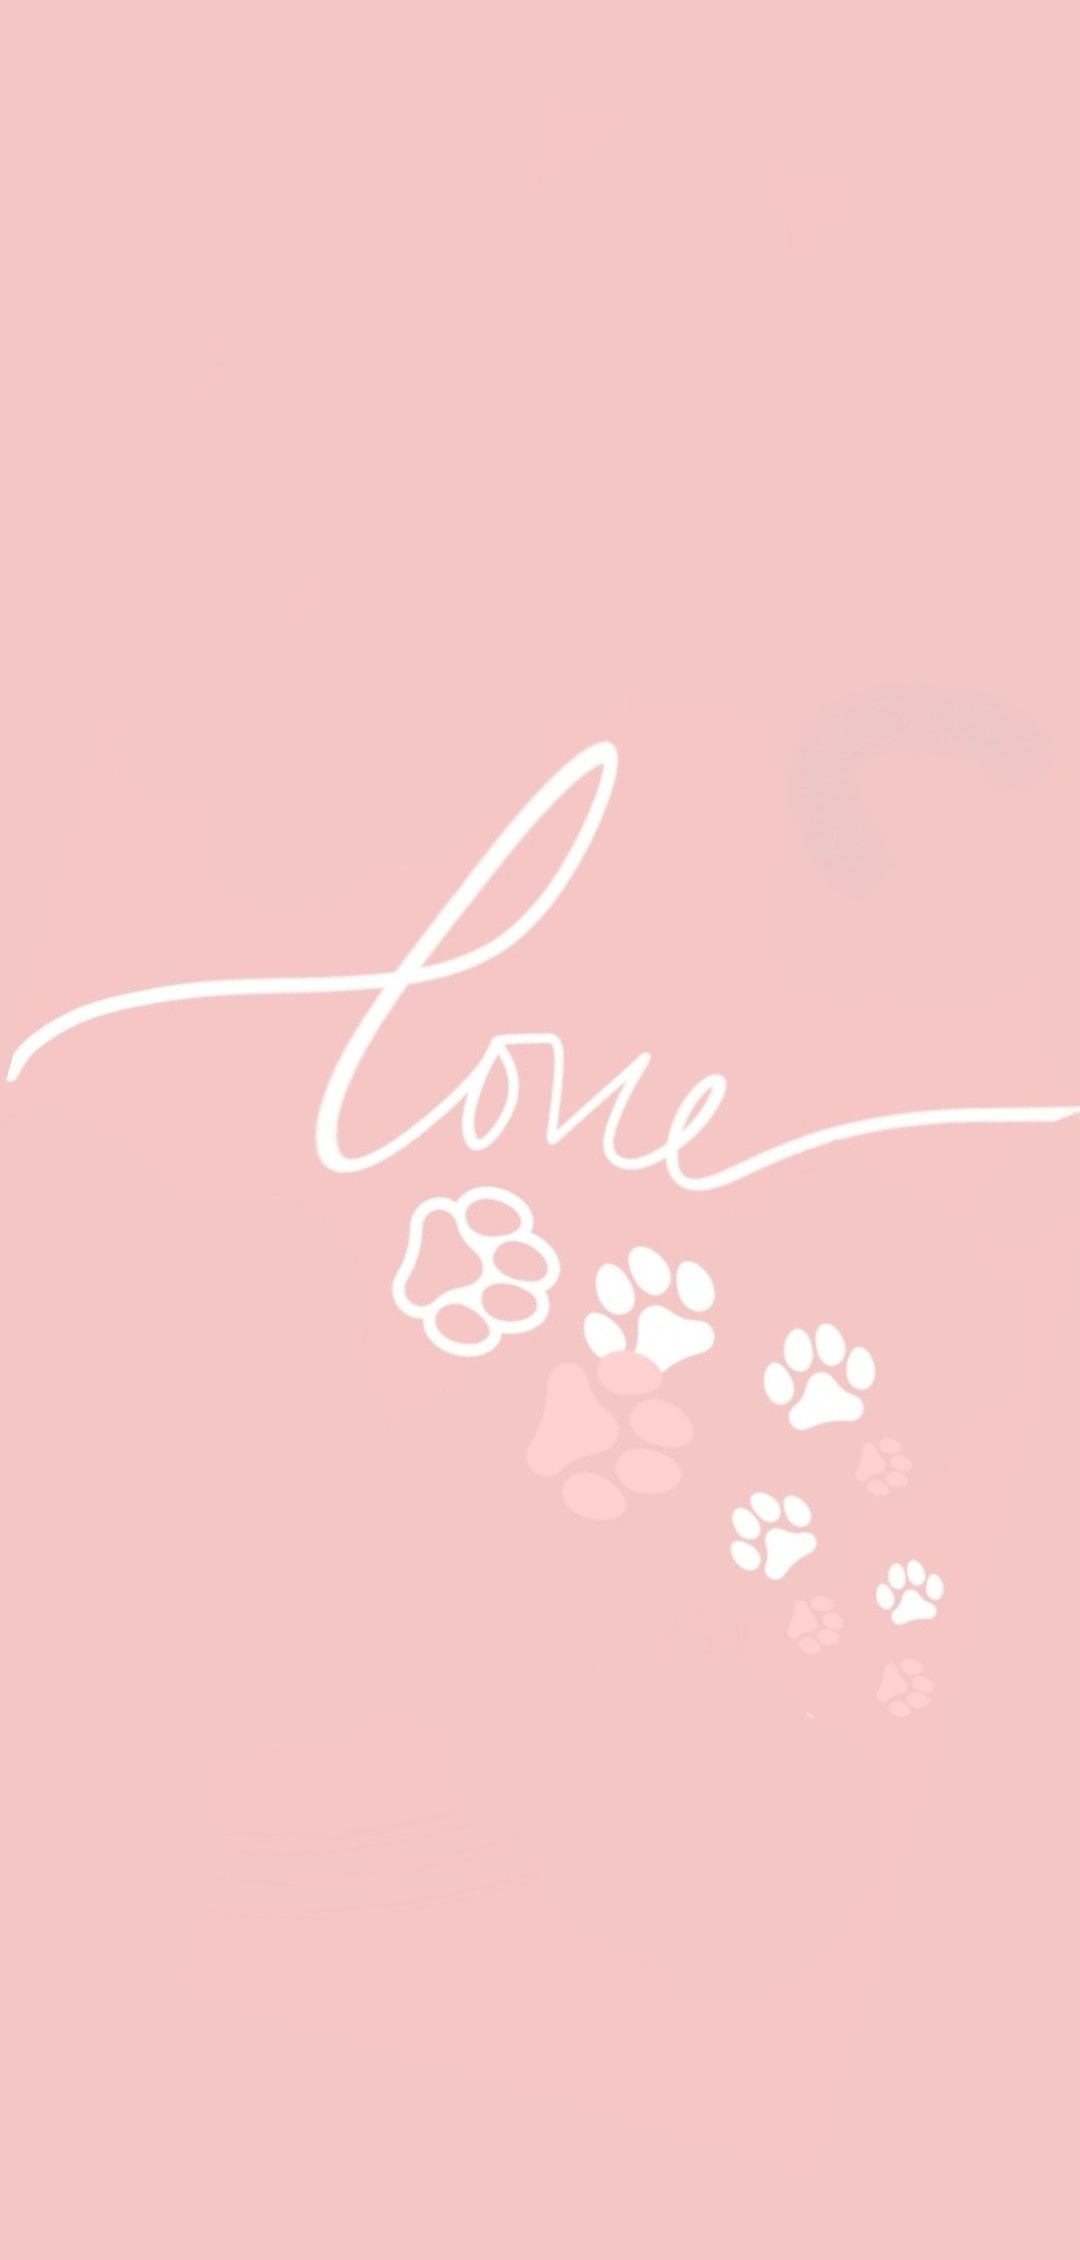 1080x2260 Love Paw Print Wallpaper #wallpaper #iphone #love #doglover #pawprint By- ne*****@***** | Paw wallpaper, Dog wallpaper iphone, Iphone prints